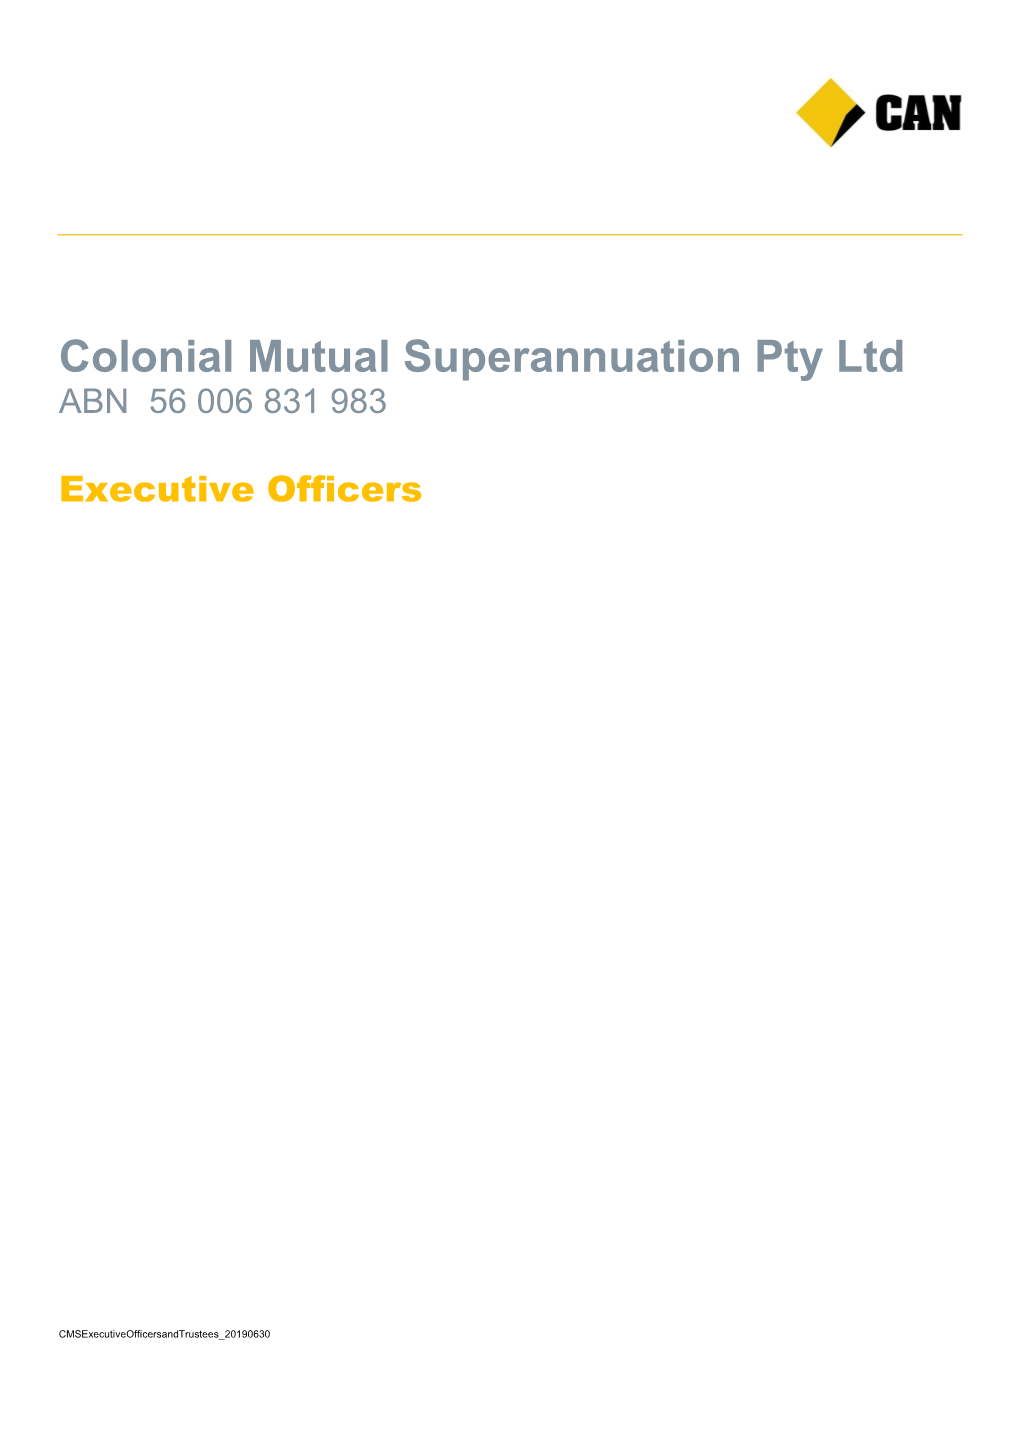 Colonial Mutual Superannuation Pty Ltd ABN 56 006 831 983